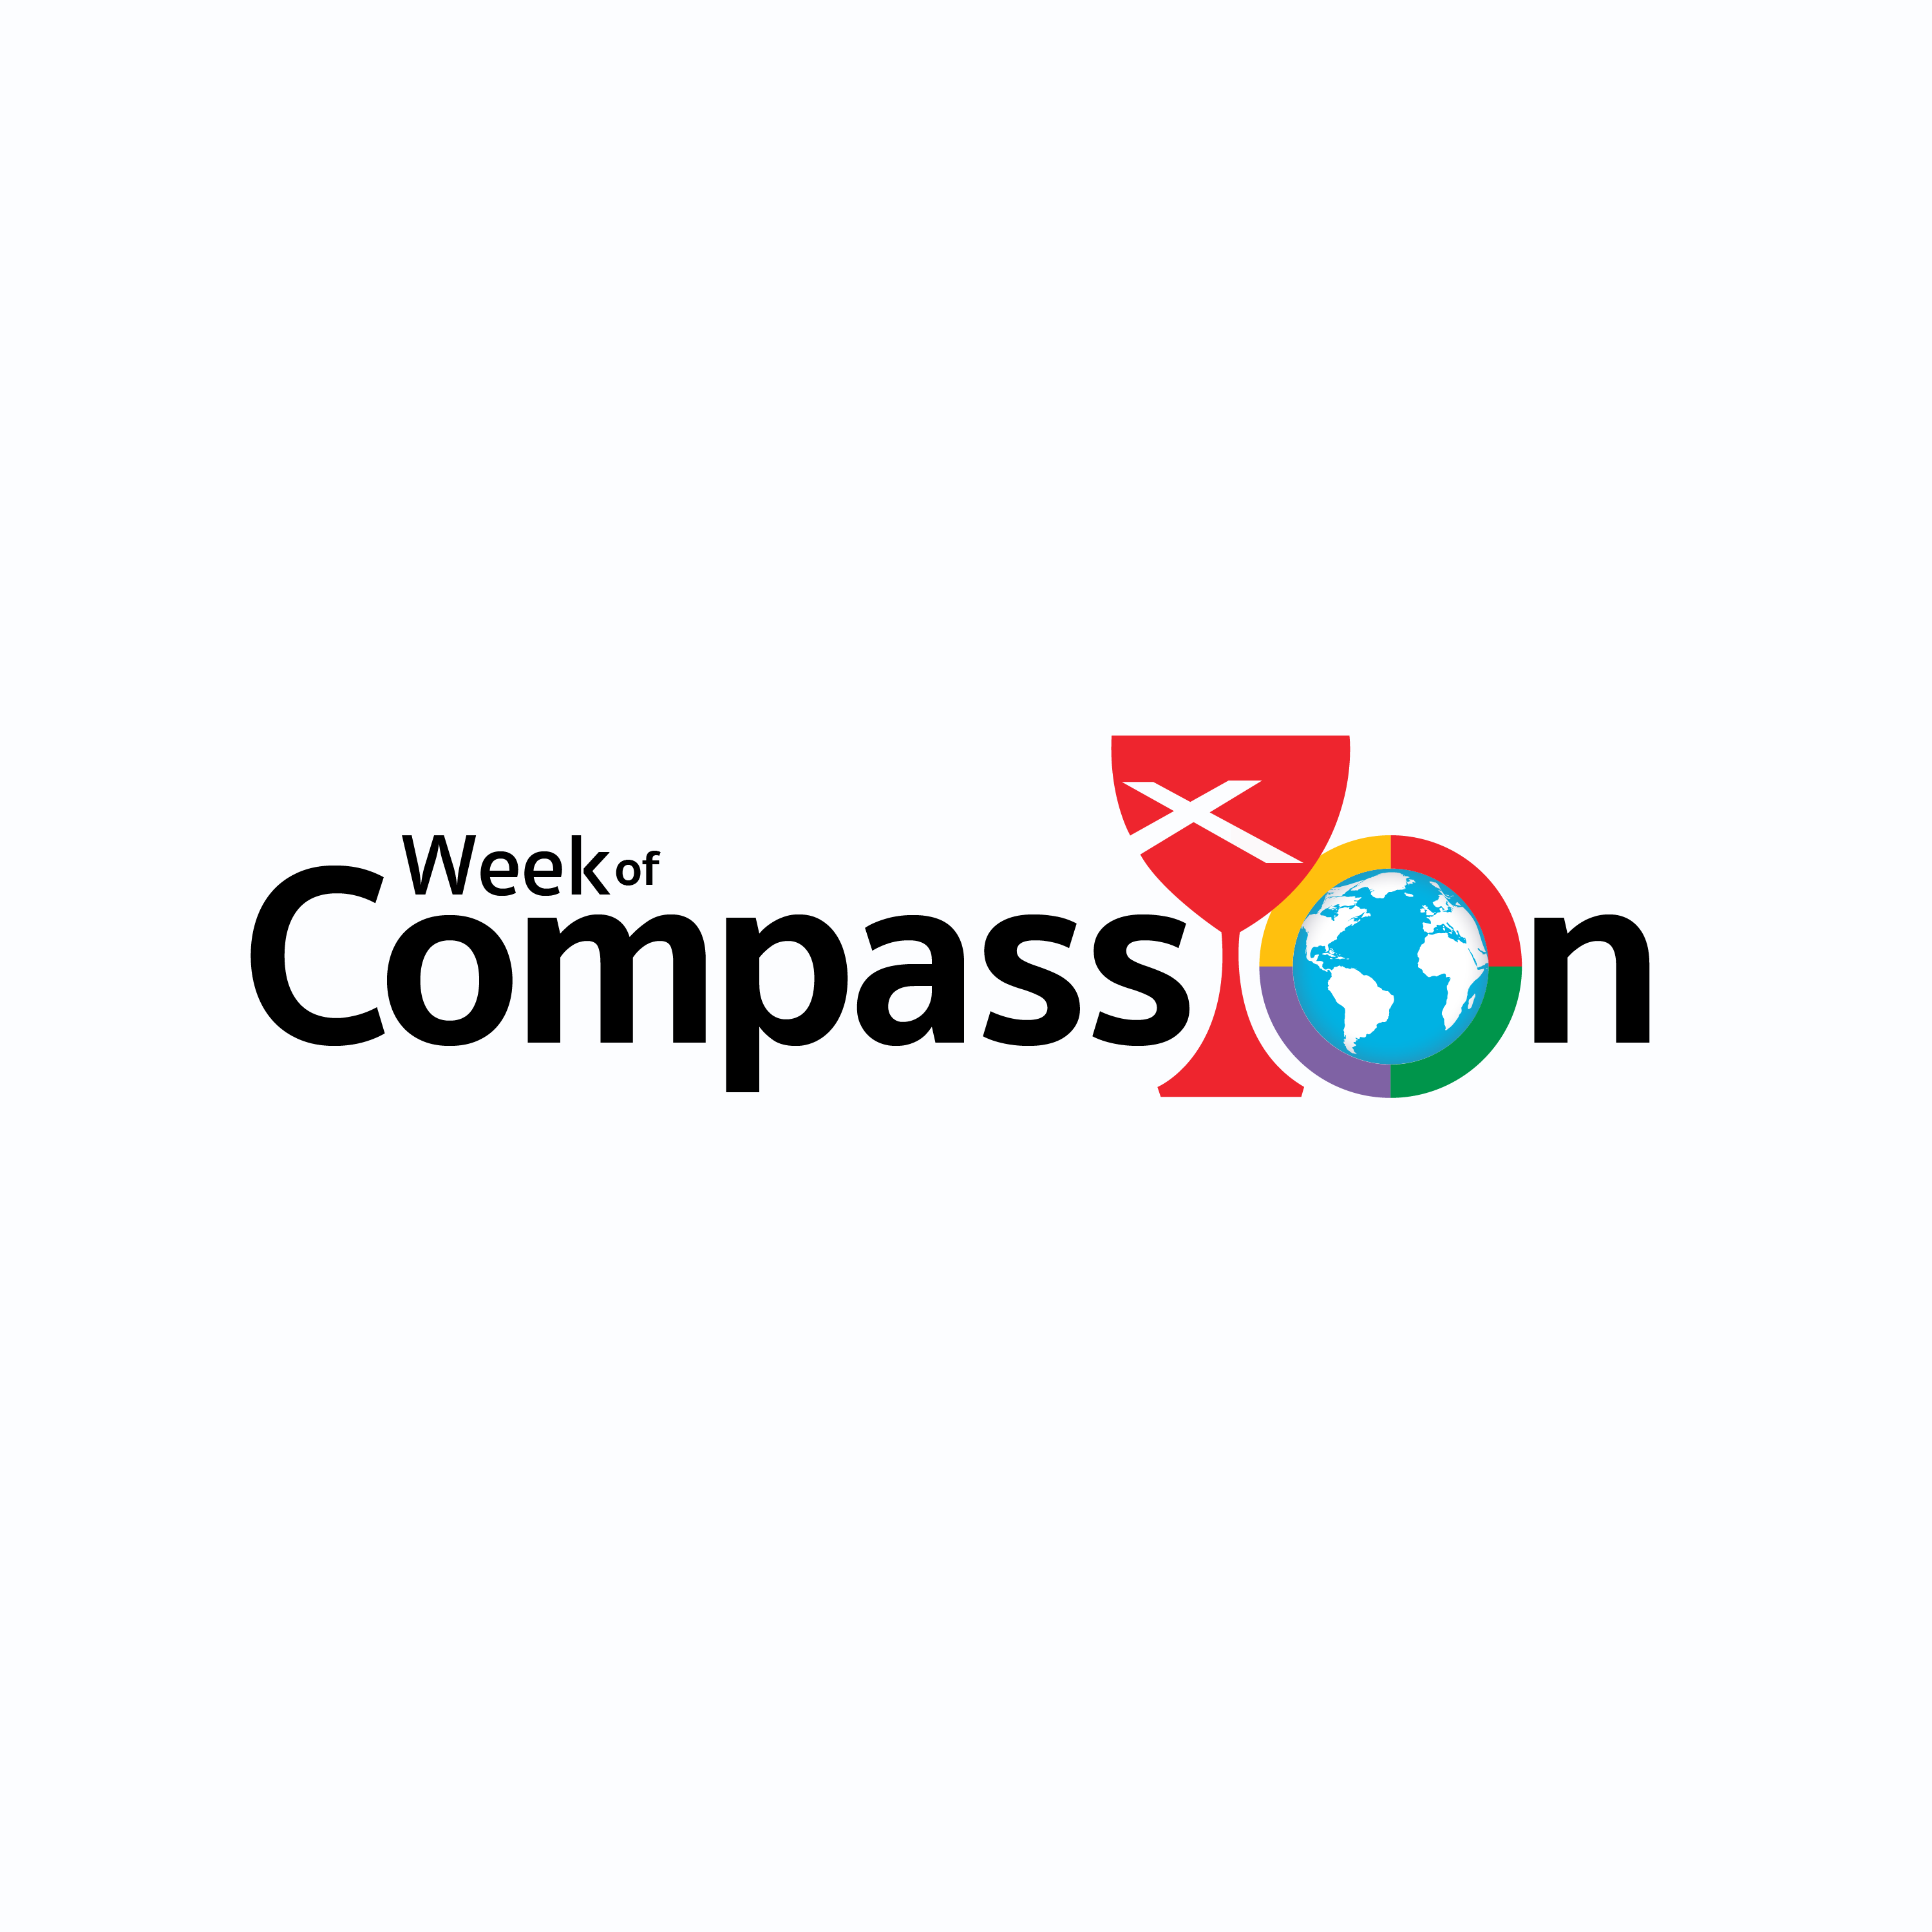 compassion logo png